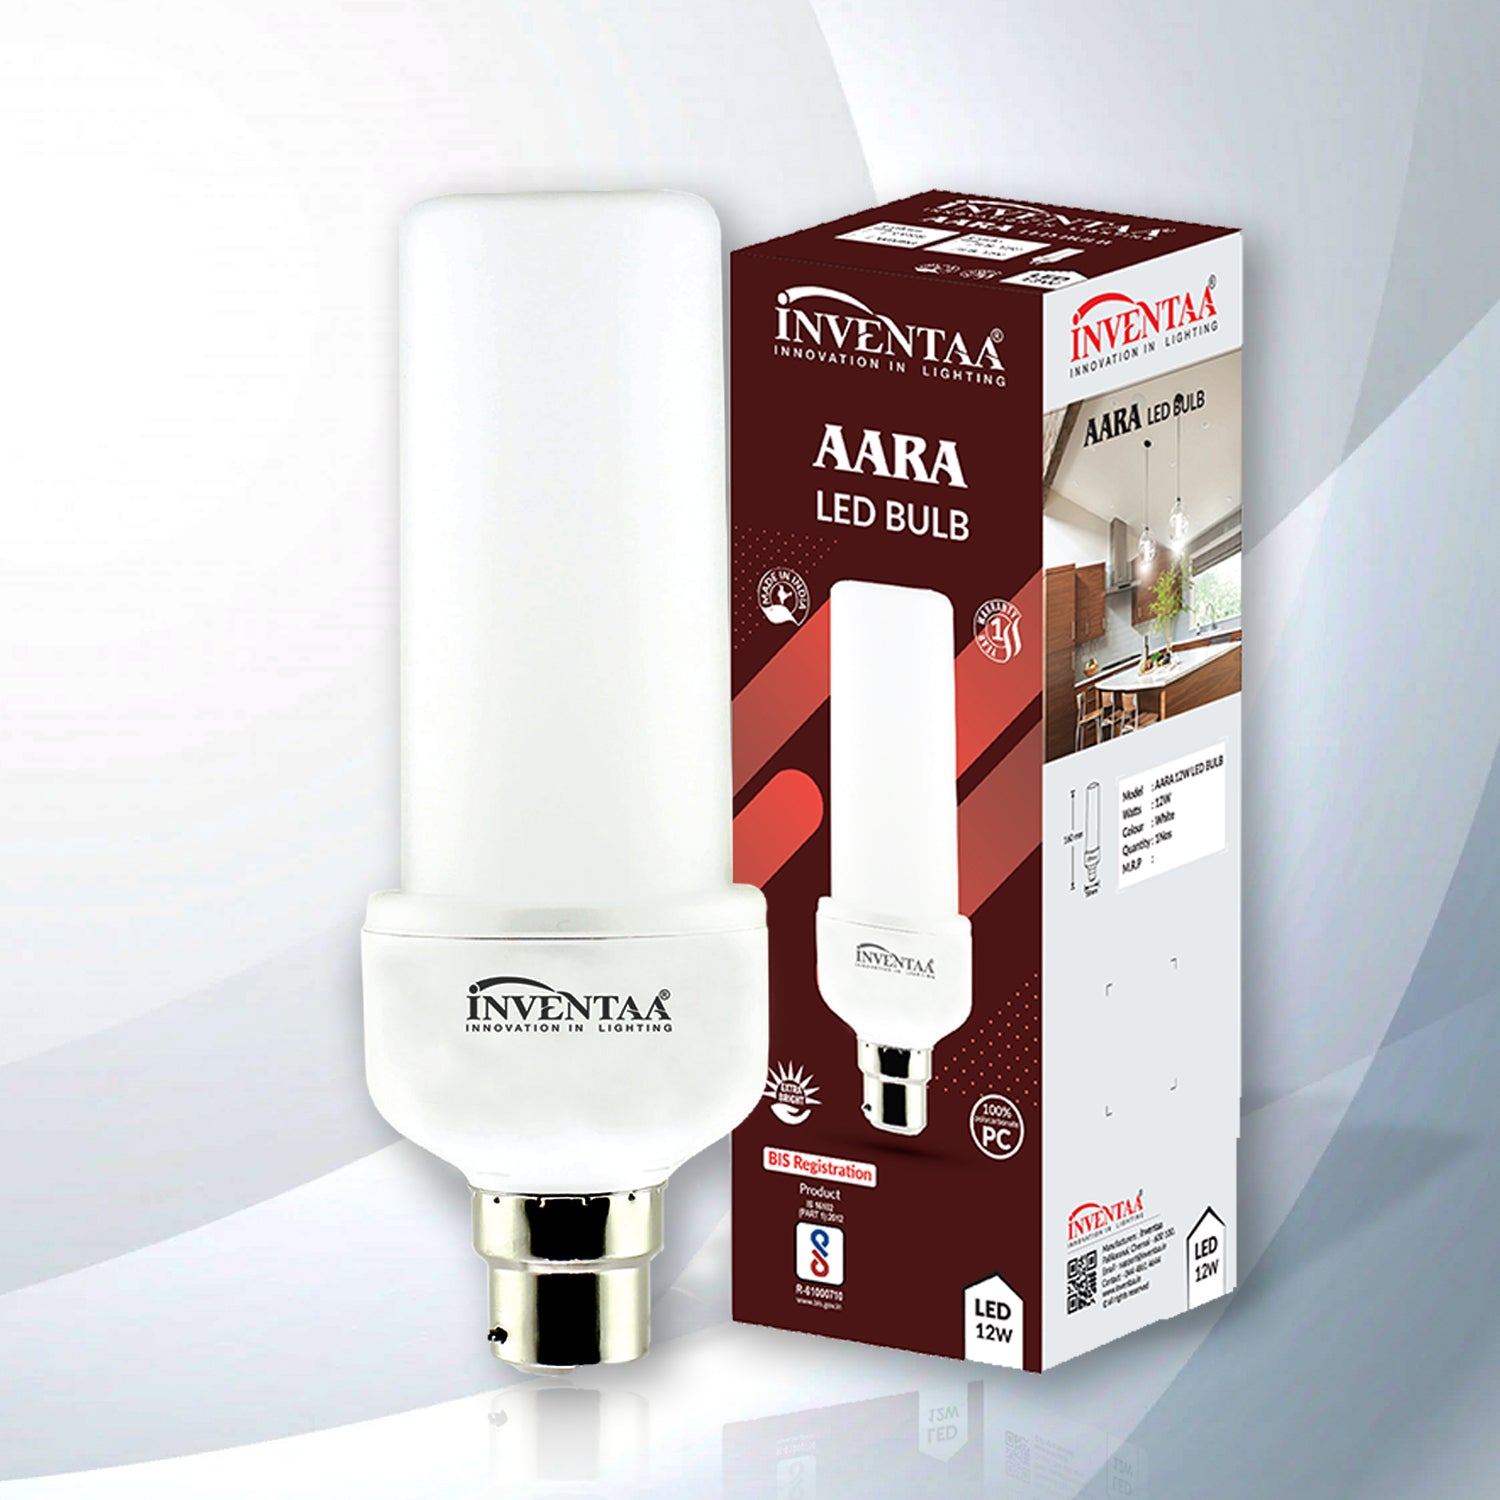 Aara LED Bulb With Its Box Enclosure